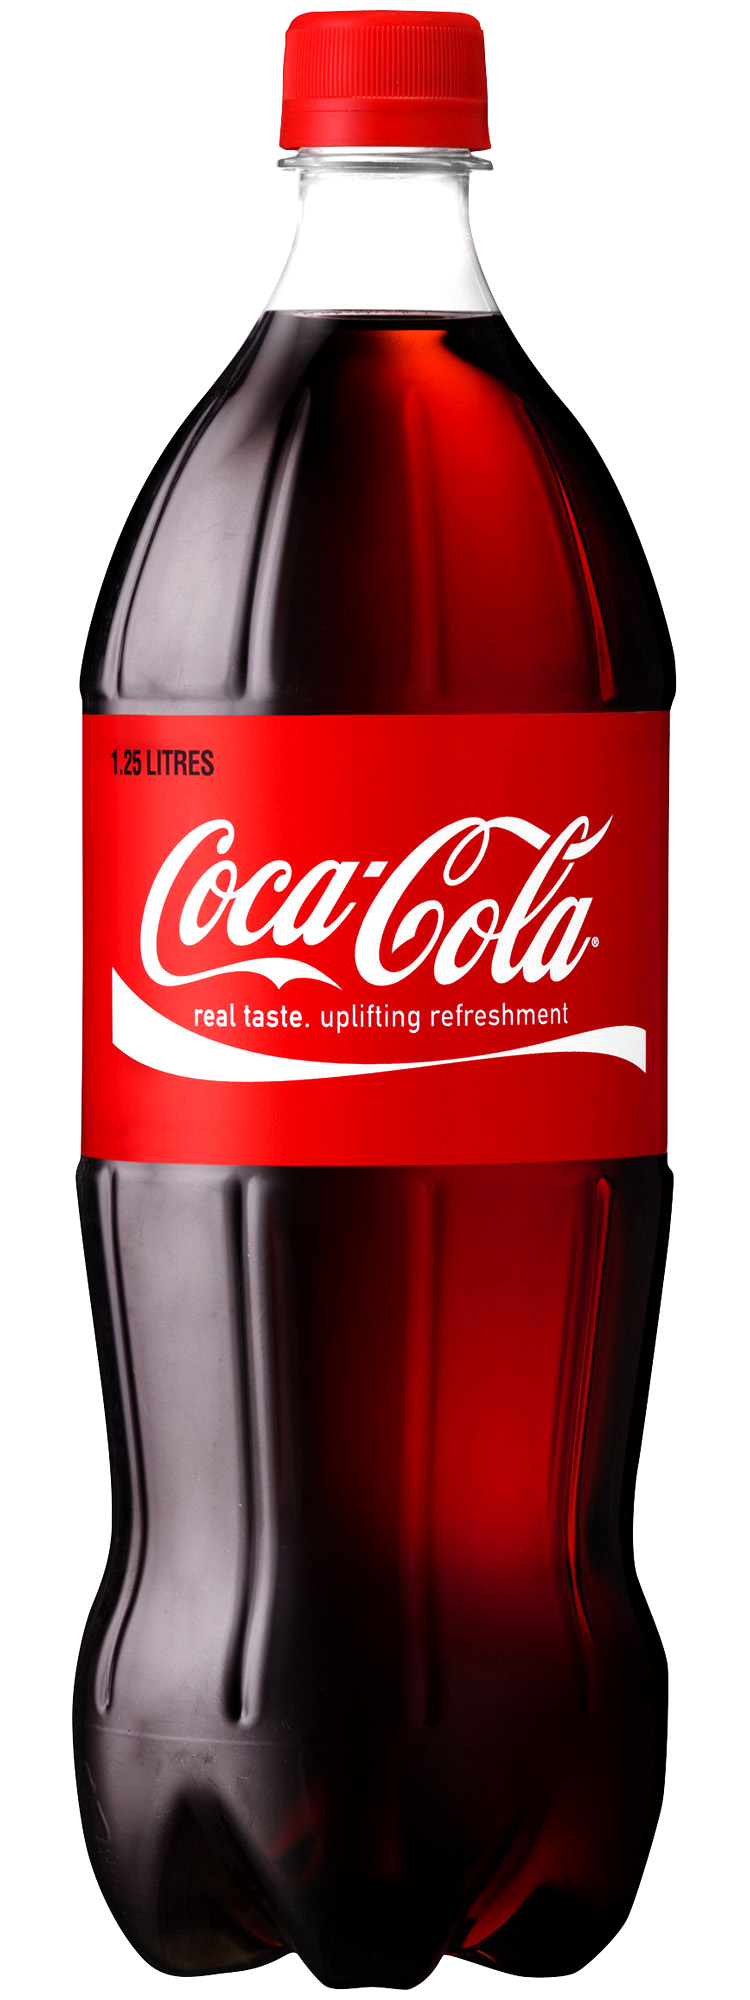 Coca Cola Bottle Png Image - Coca Cola, Transparent background PNG HD thumbnail